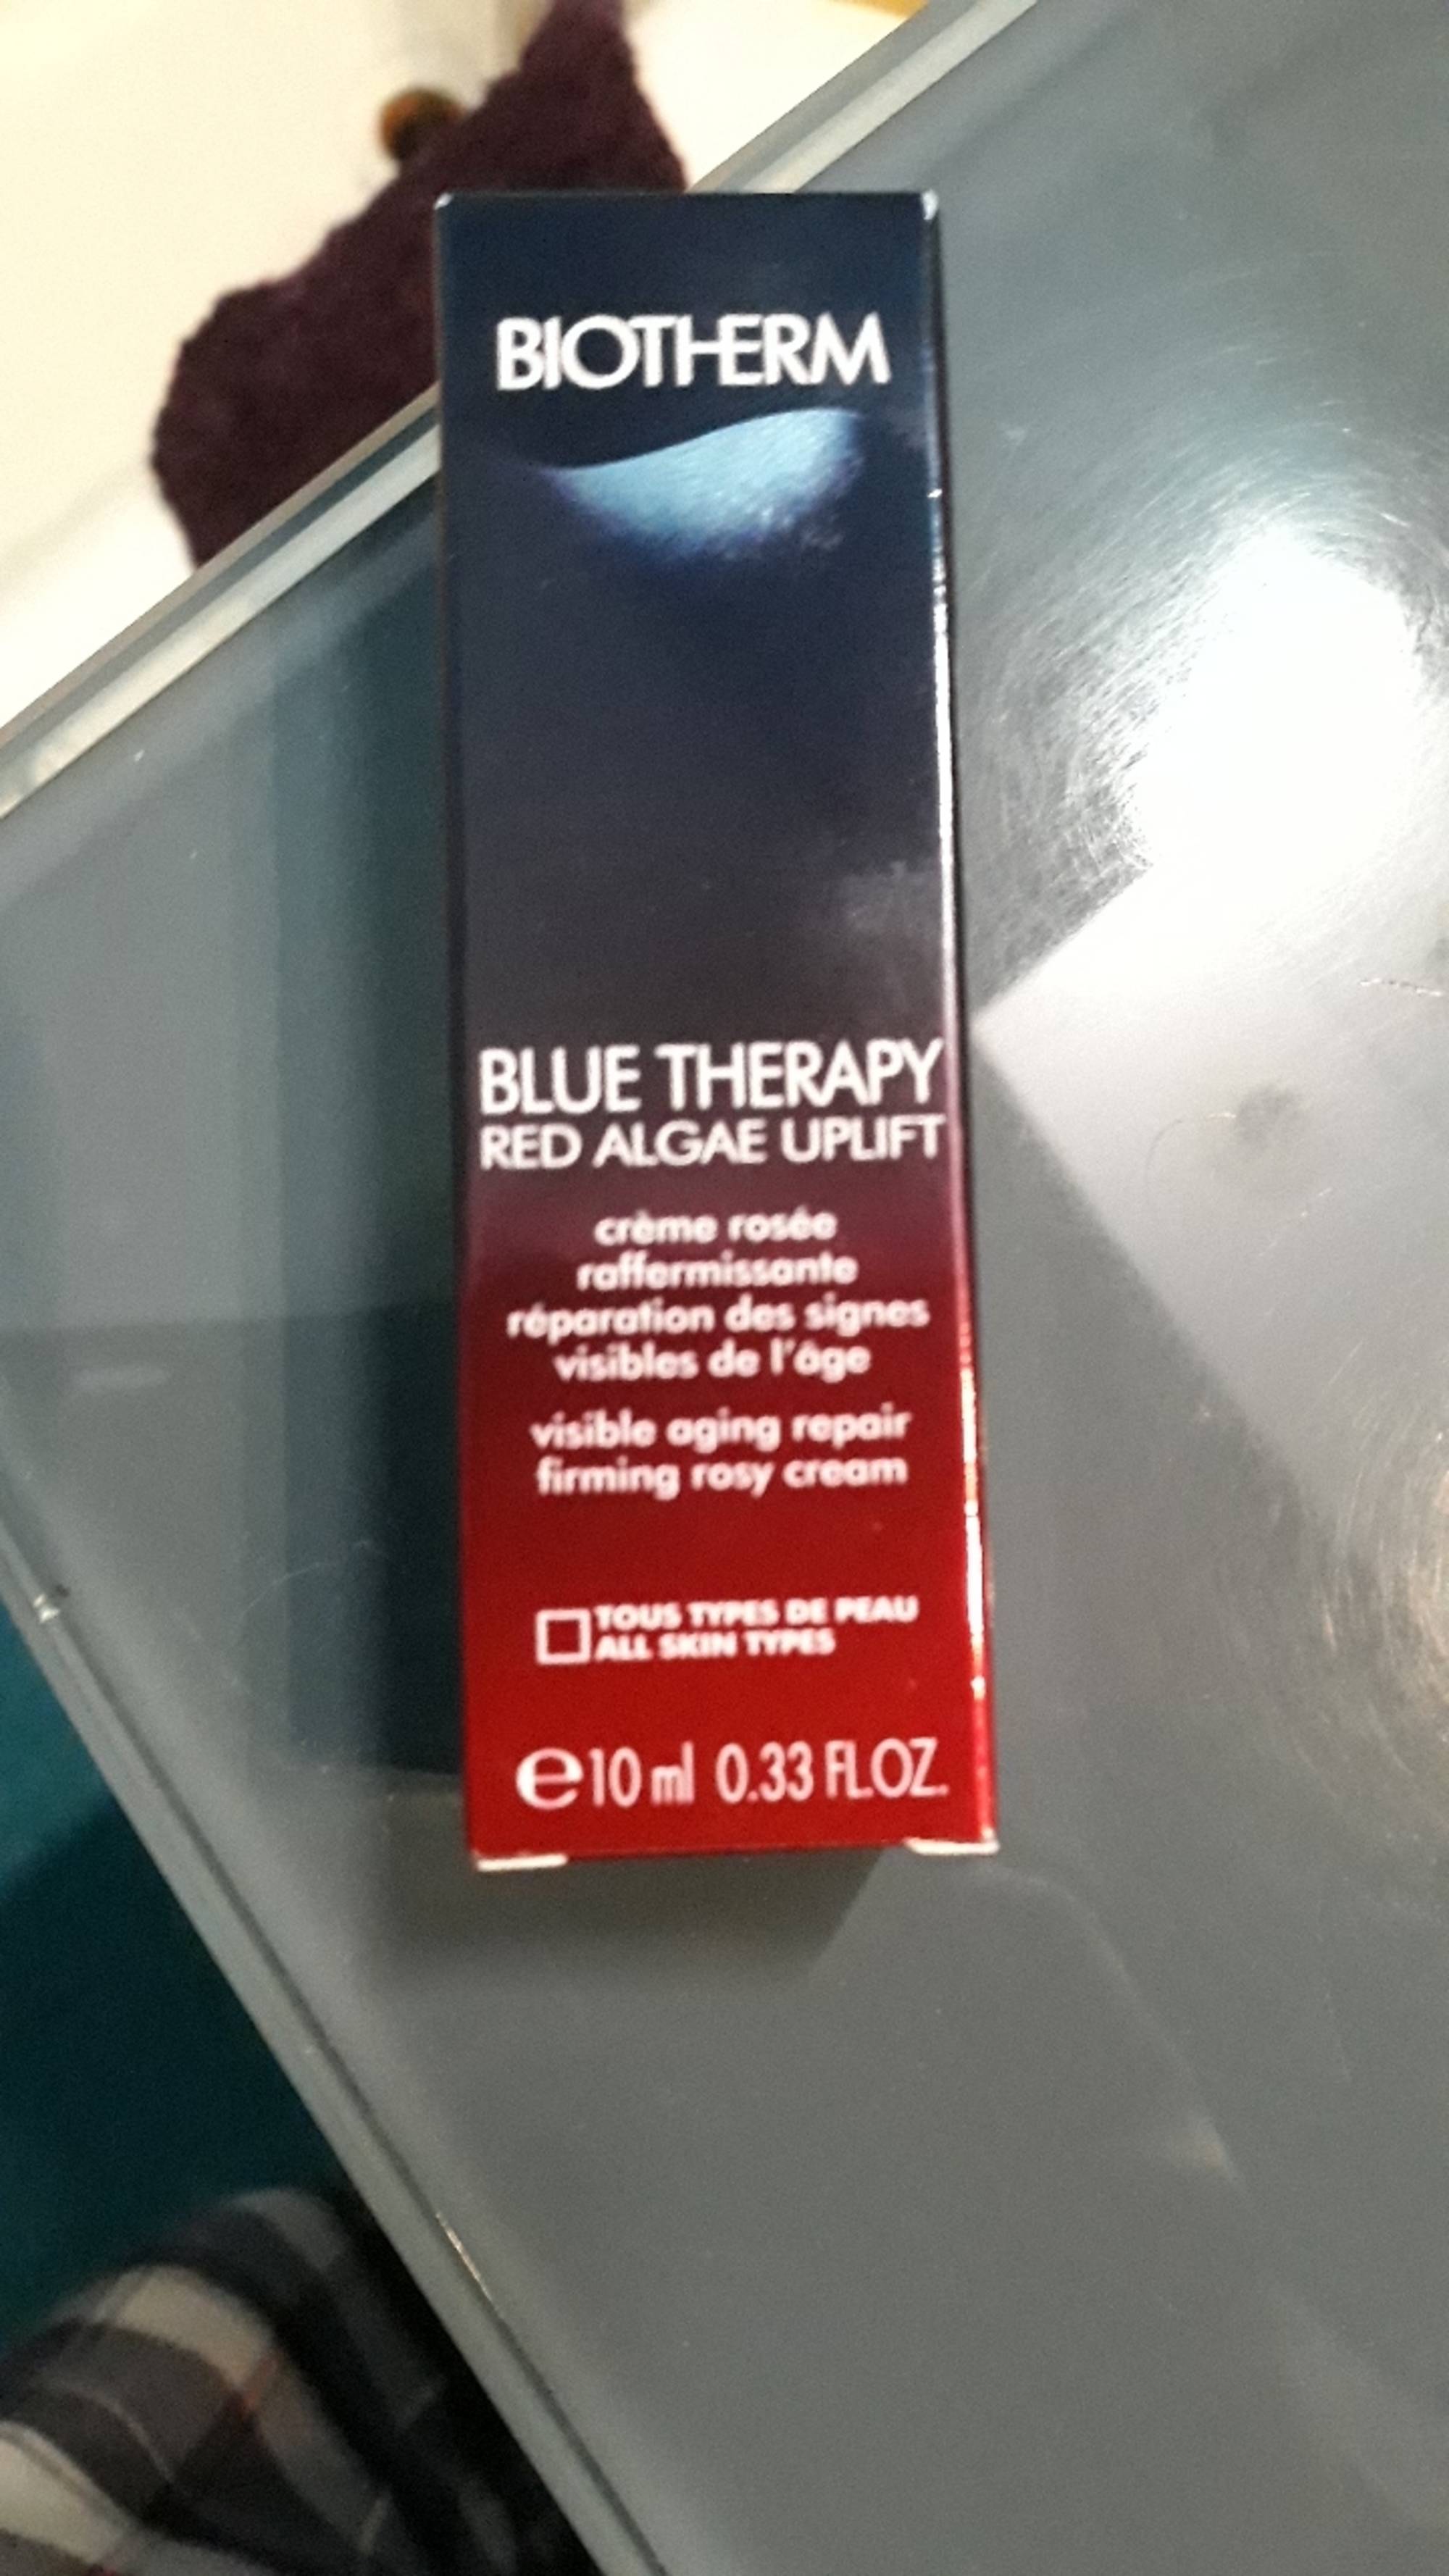 BIOTHERM - Blue therapy red algae uplift - Crème rosée raffermissante